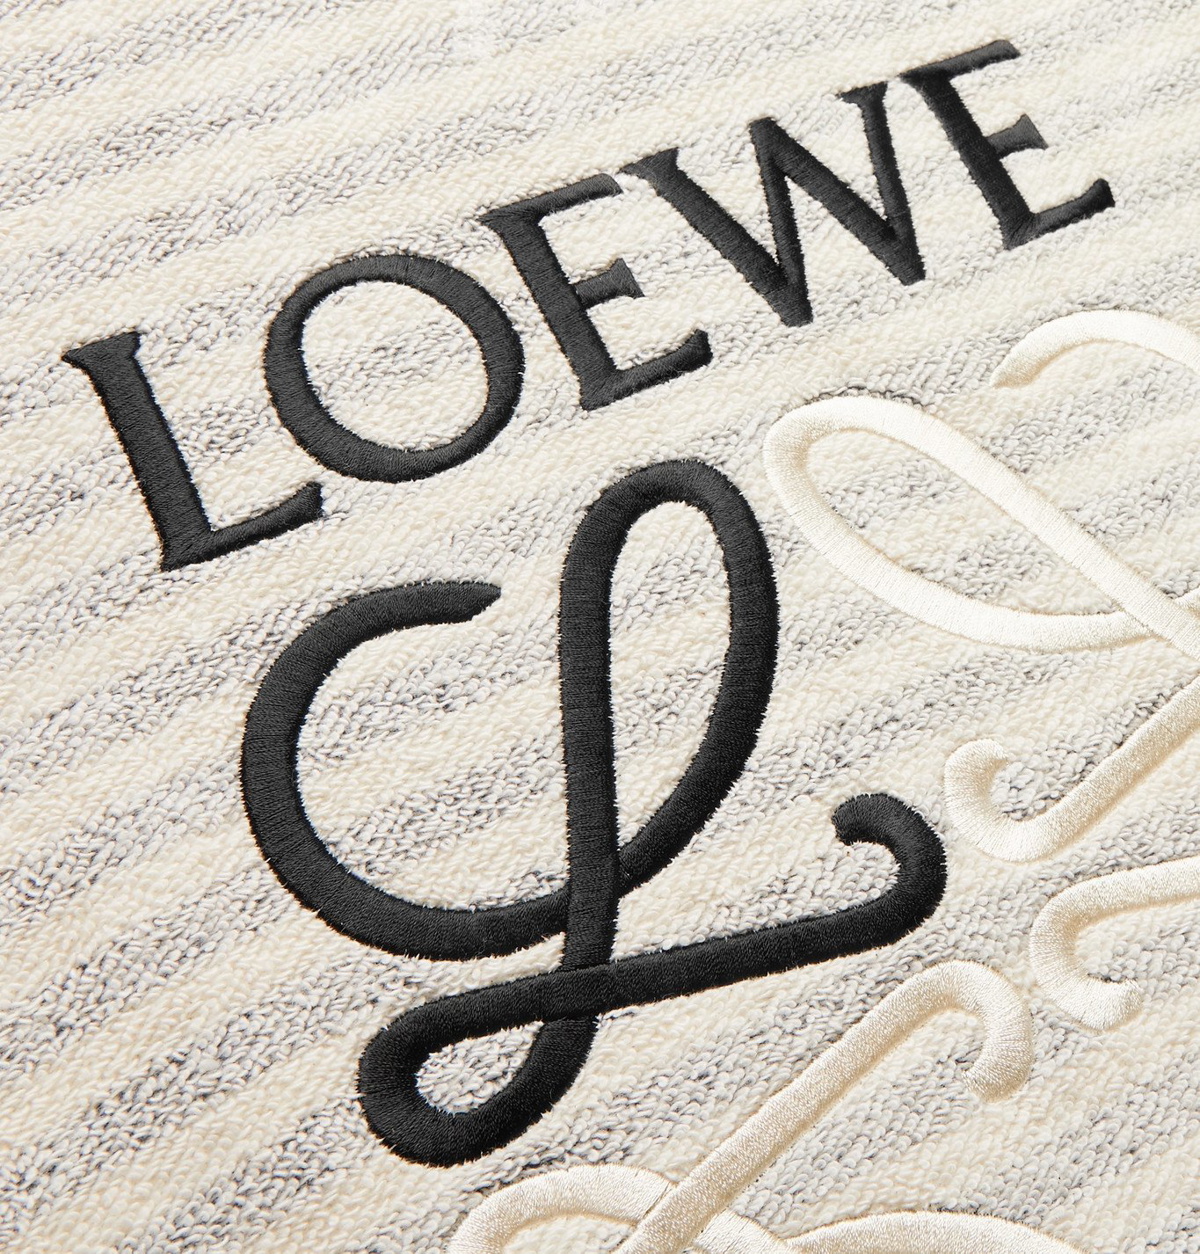 new loewe logo